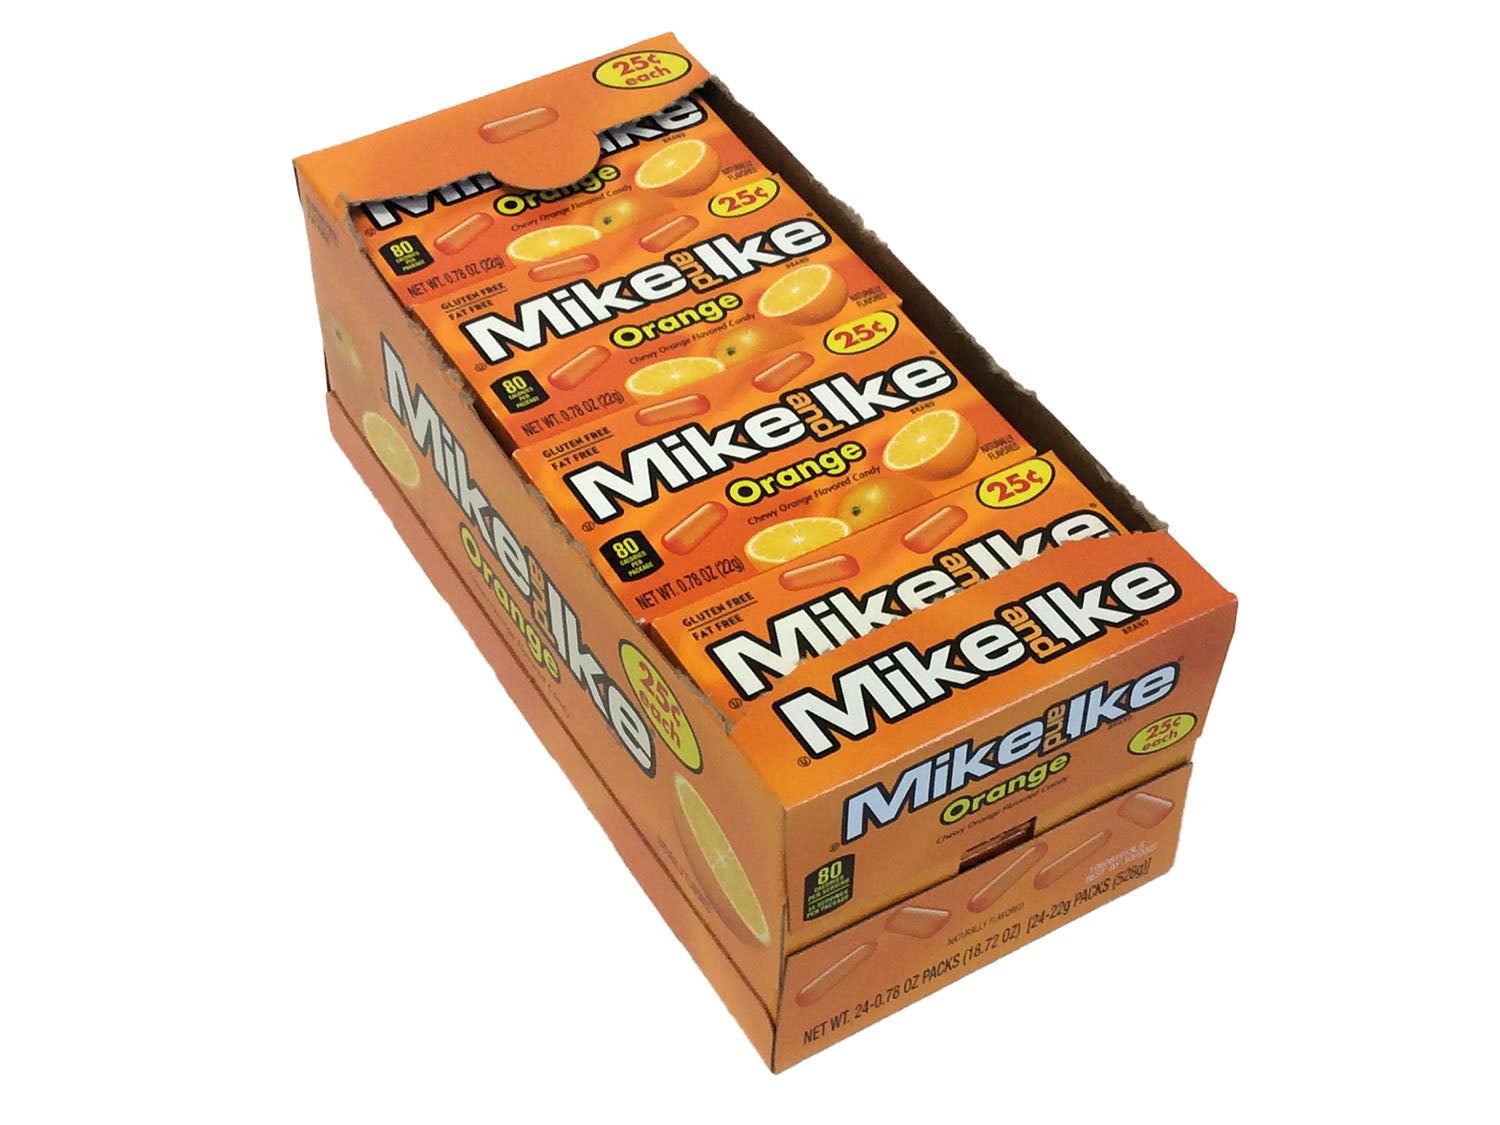 Mike & Ike Orange - 0.78 oz box - box of 24 open